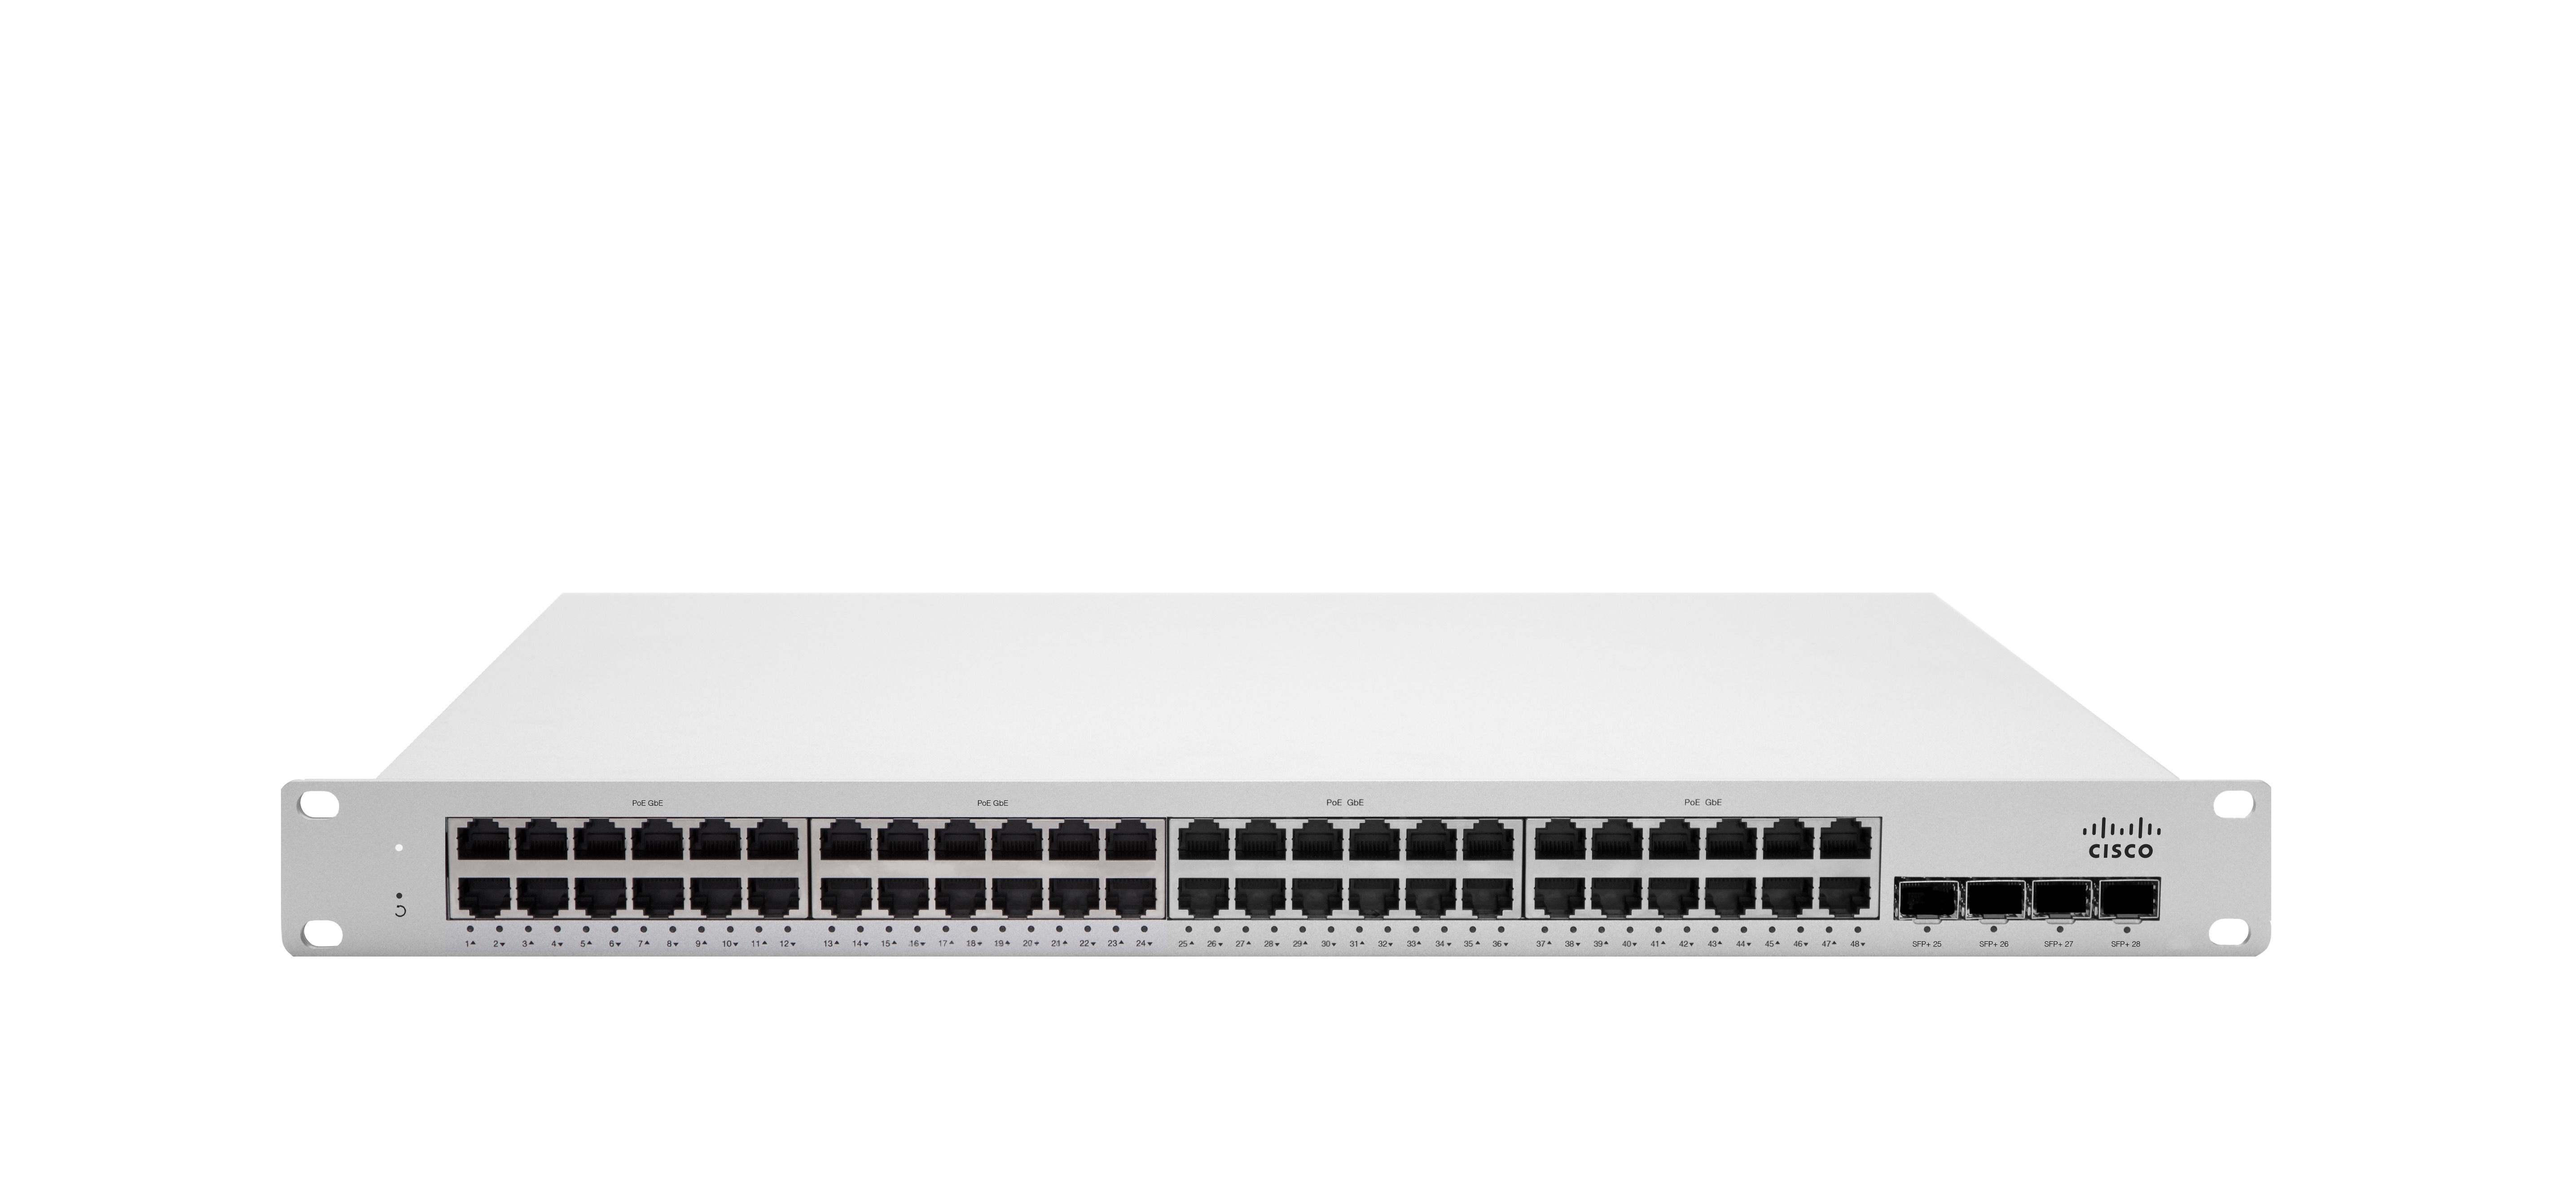 Cisco Meraki MS250-48FP Cloud Managed Switch